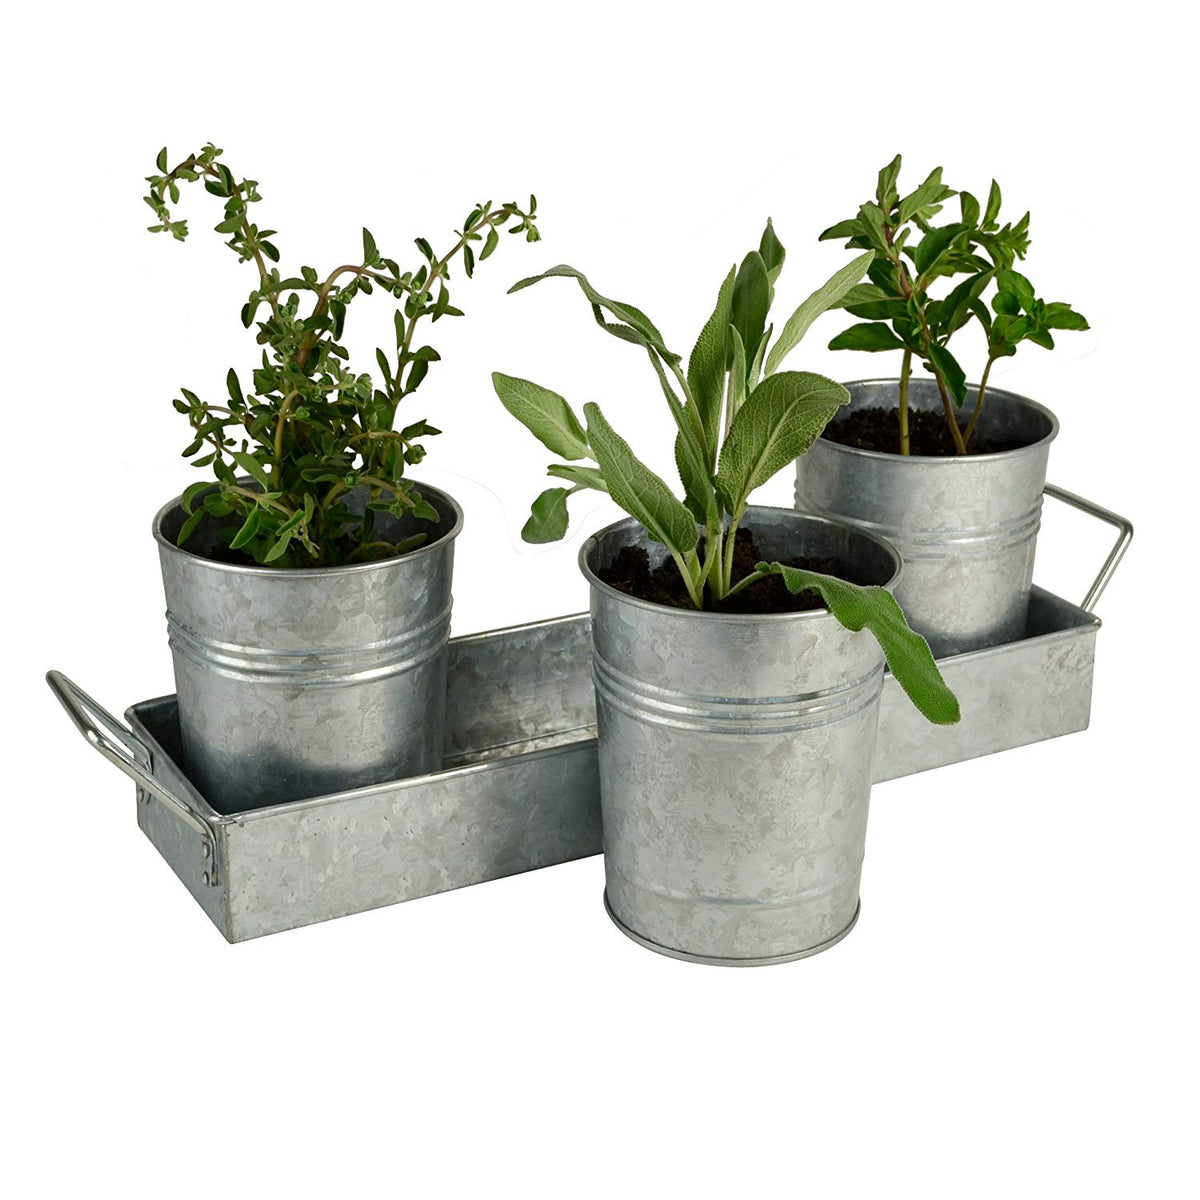 Galvanized Set of Three Planters With Tray, Gray - BM164576